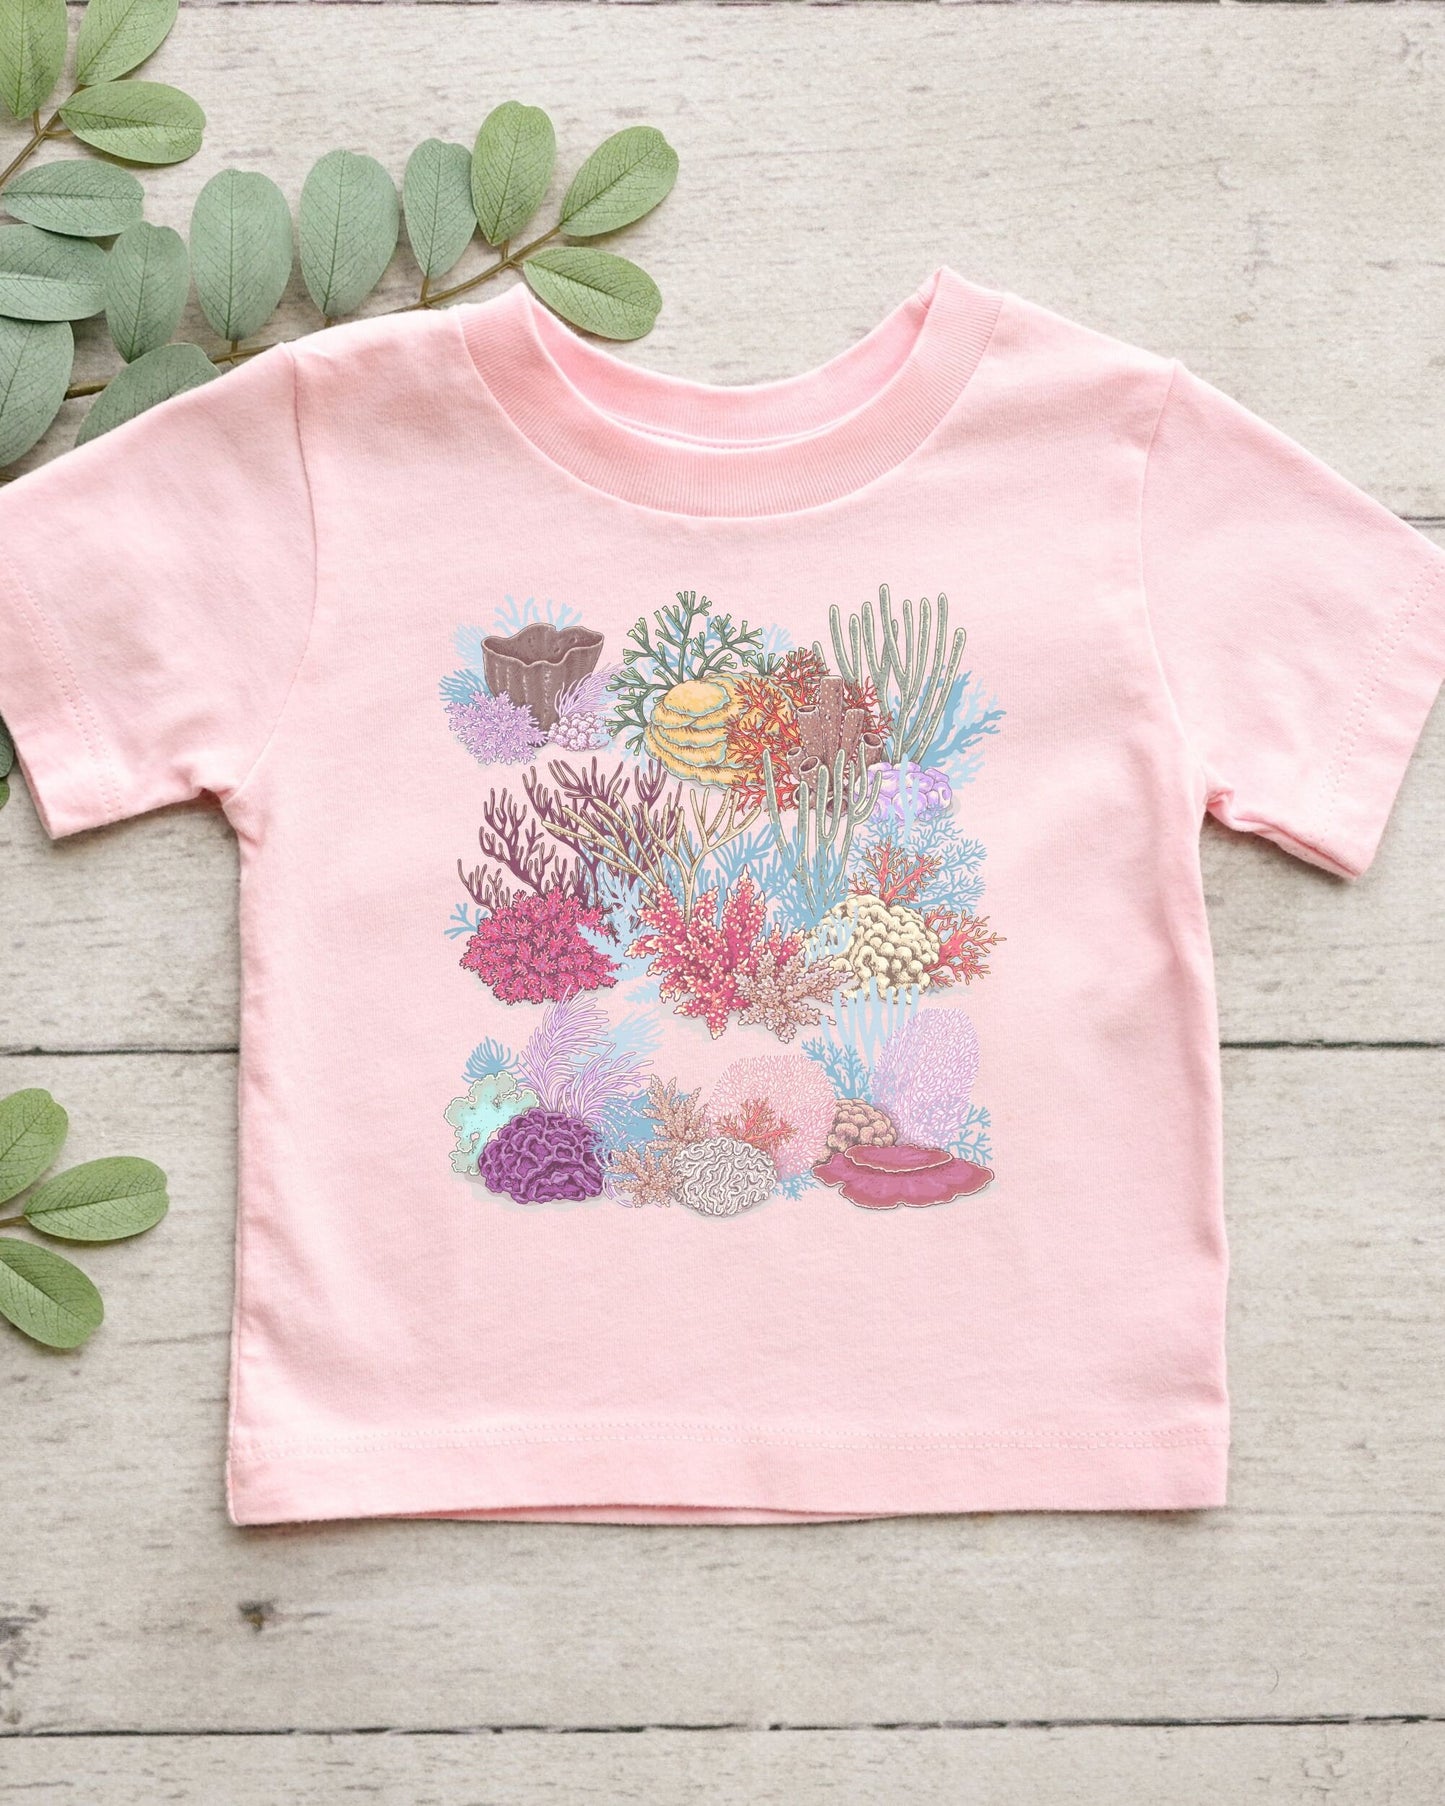 Coral Reef Shirt For Kids Mermaidcore Shirt Toddler Oceancore Shirt Girl Kids Ocean Shirt Beach Shirt for Toddler